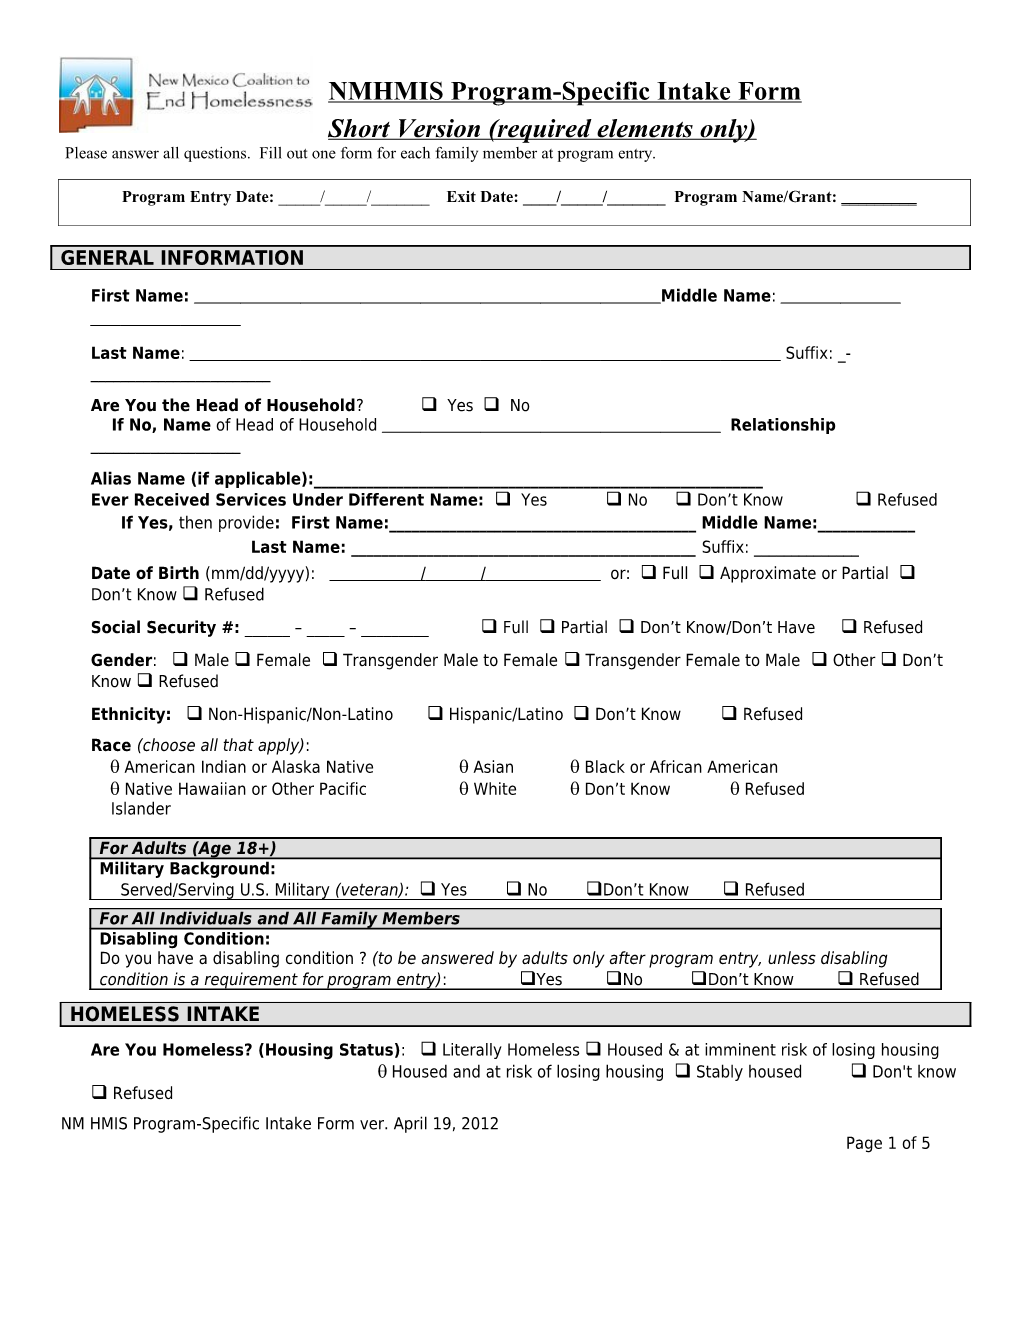 NMHMIS Program-Specific Intake Form (10-07-2009)